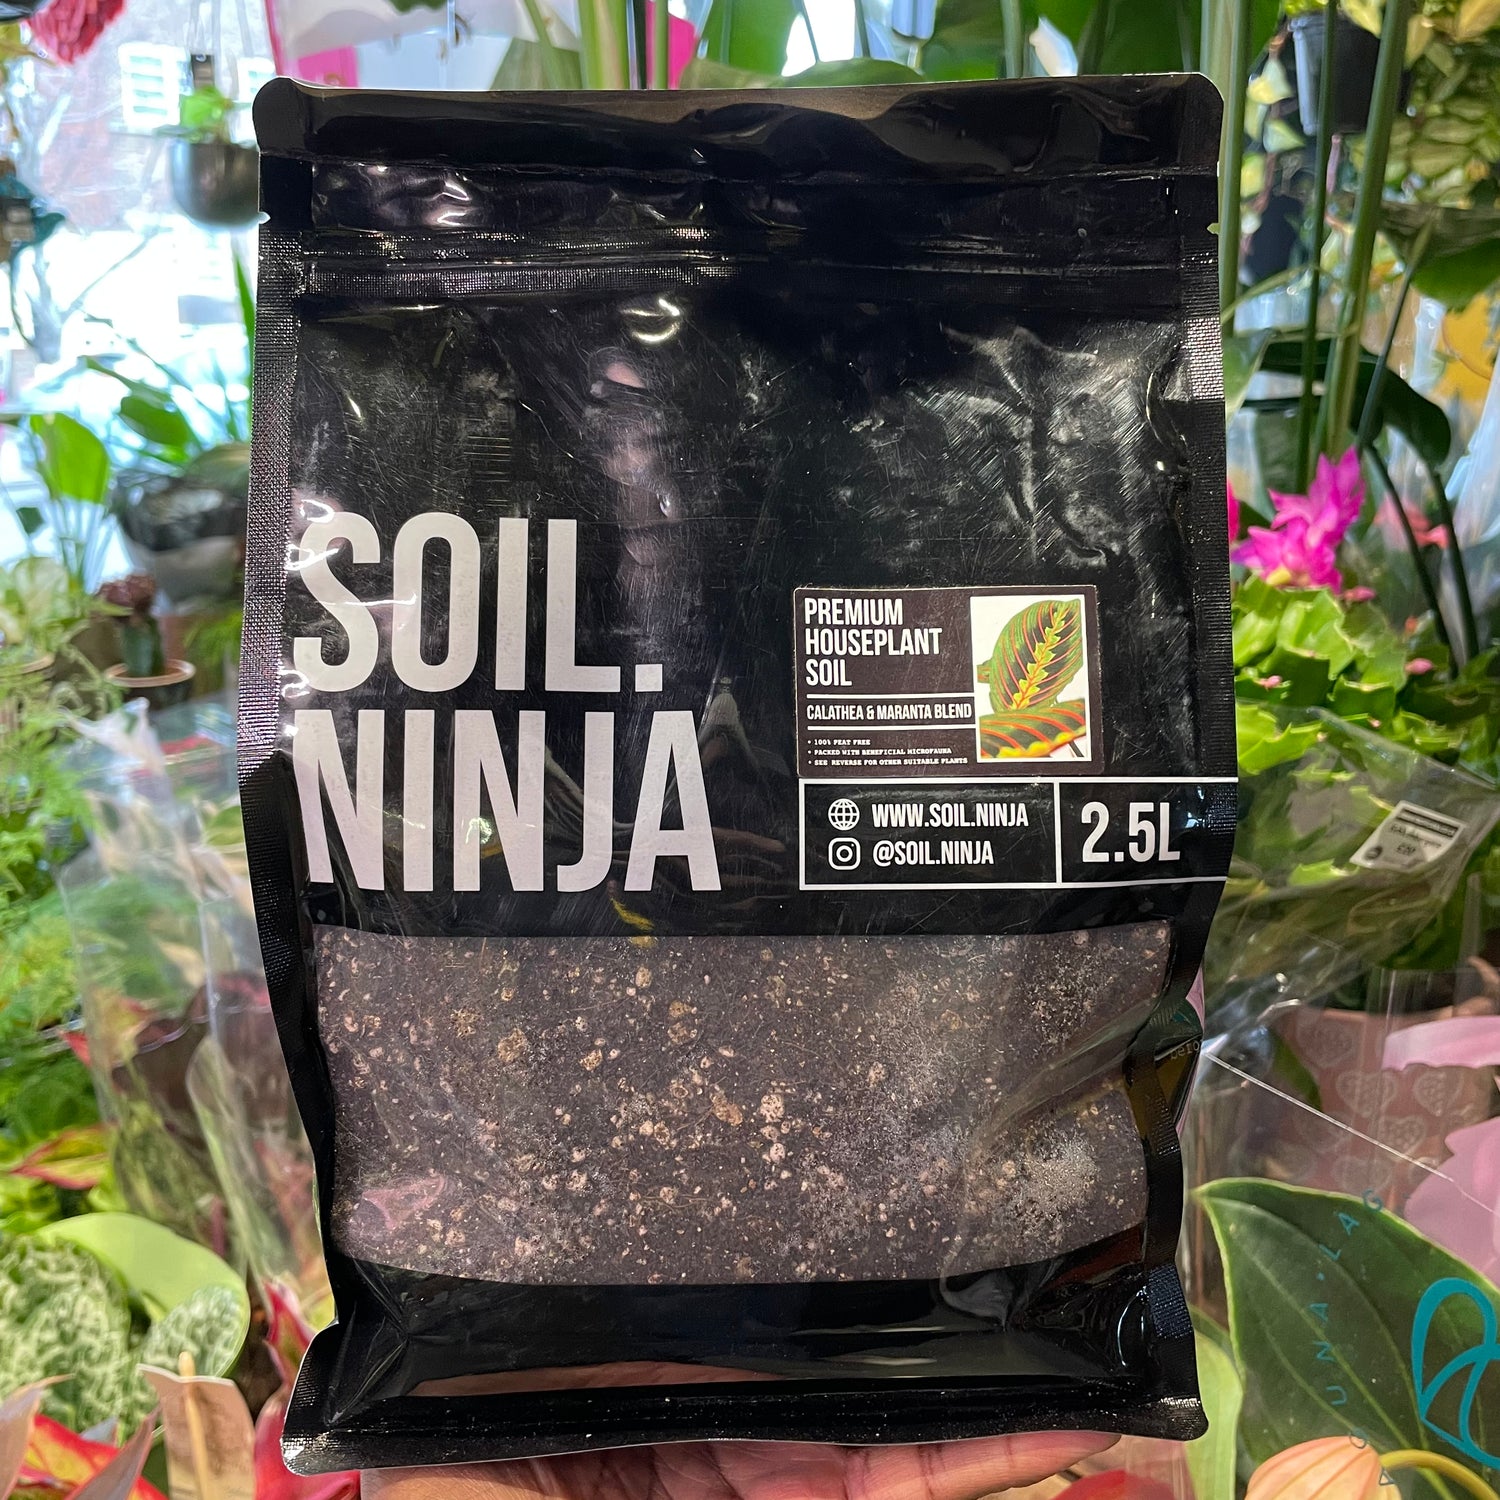 A bag of Soil Ninja | Calathea and Maranta 2.5L in Urban Tropicana’s store in Chiswick, London.